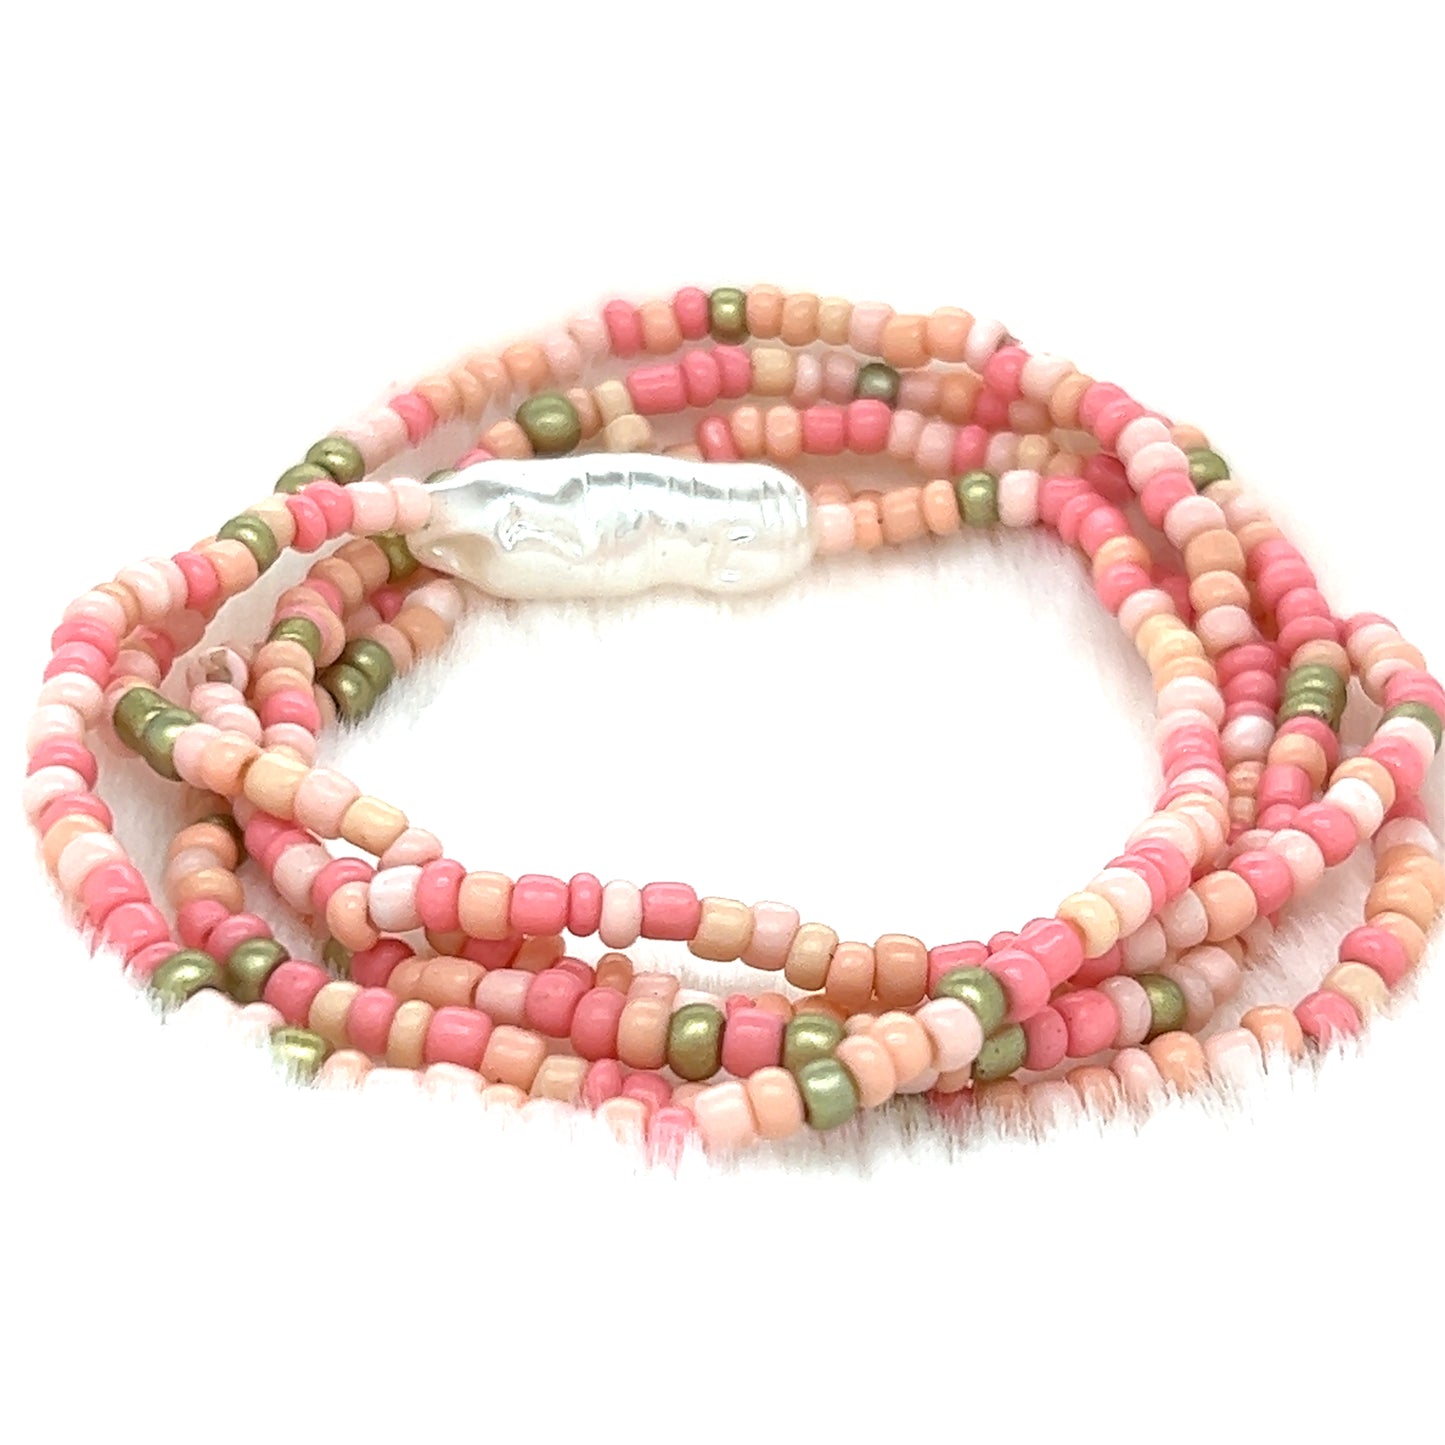 Pearl & Seed Bead Stretch Bracelet Set